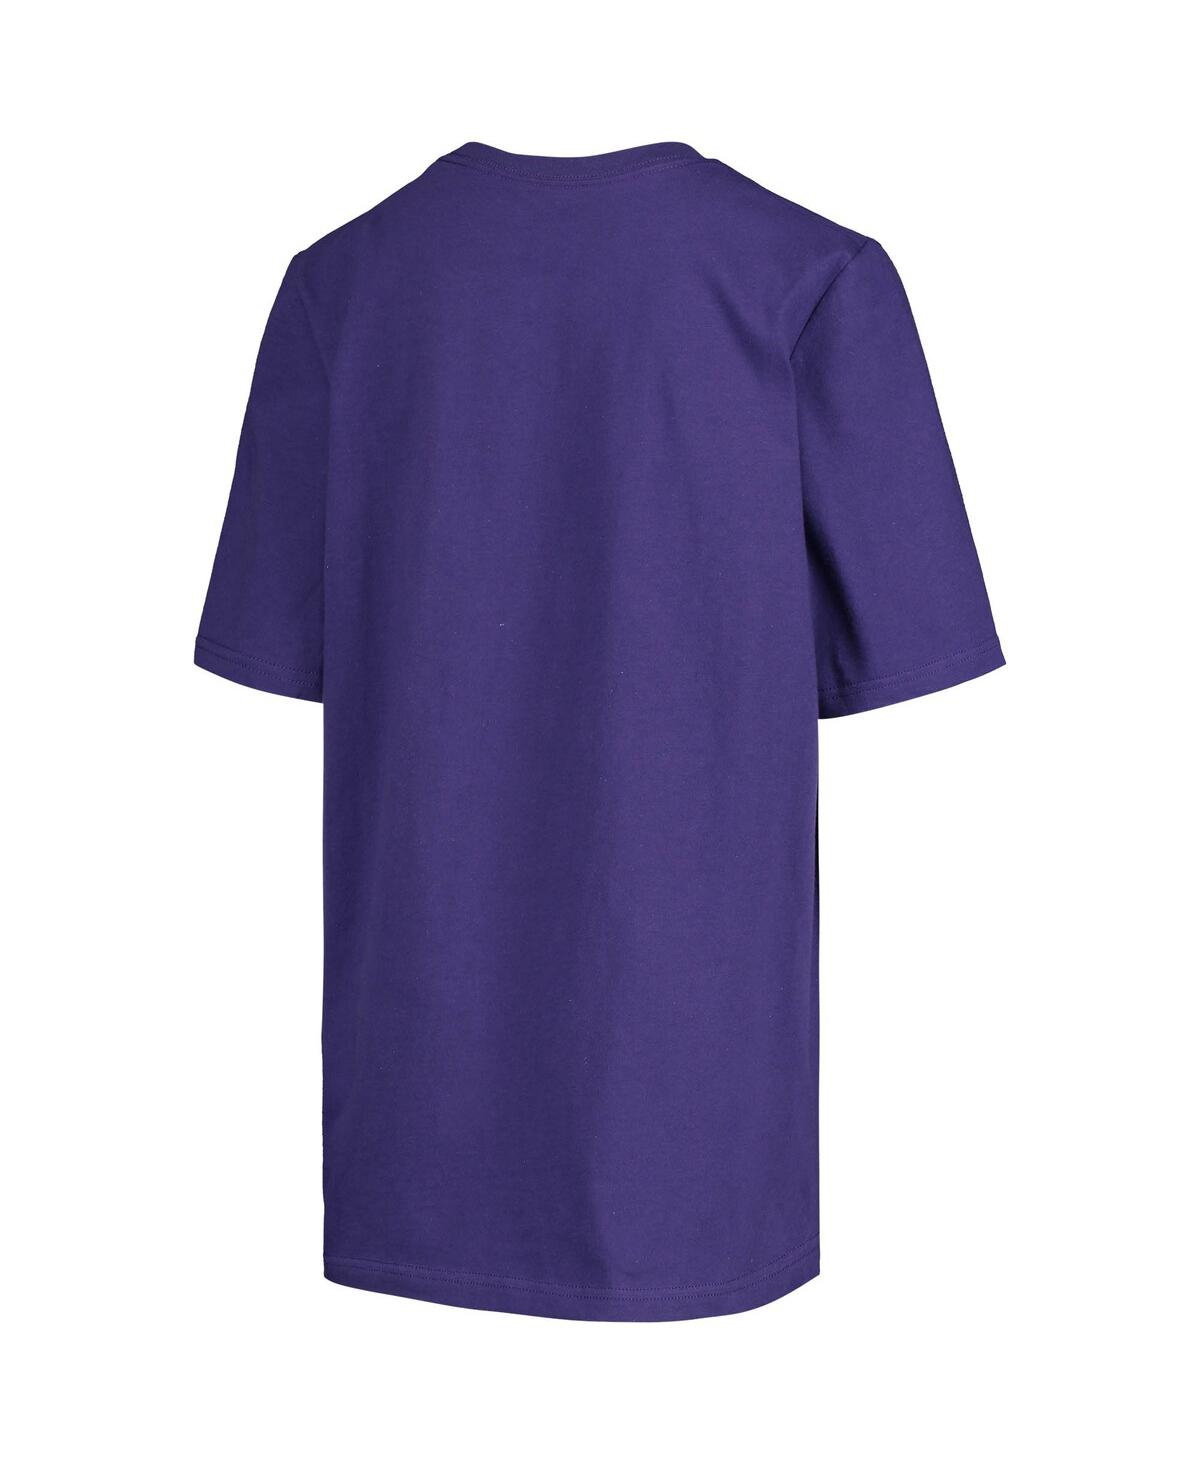 Shop Nike Men's  Purple Phoenix Mercury Wnba Logo T-shirt